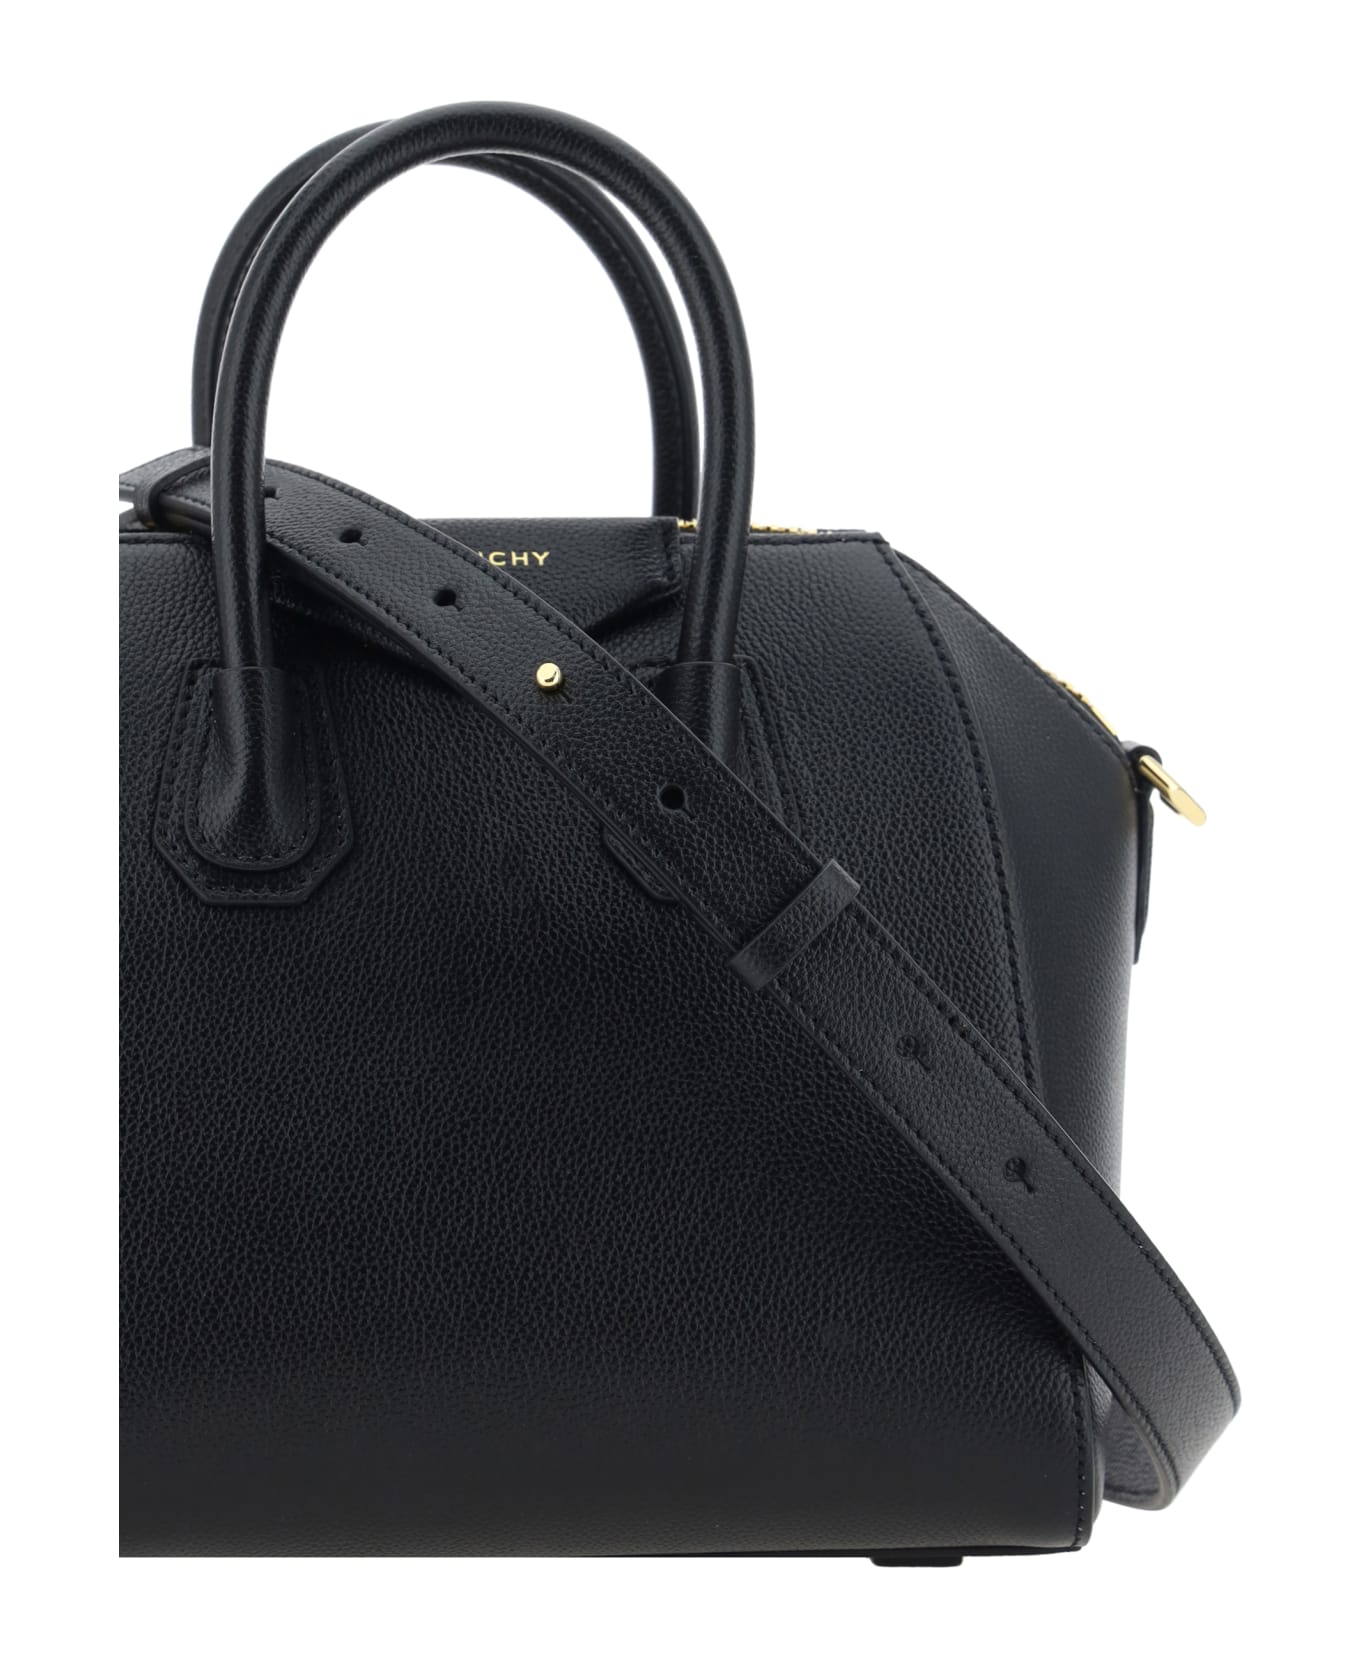 Givenchy Antigona Mini Handbag - Black トートバッグ